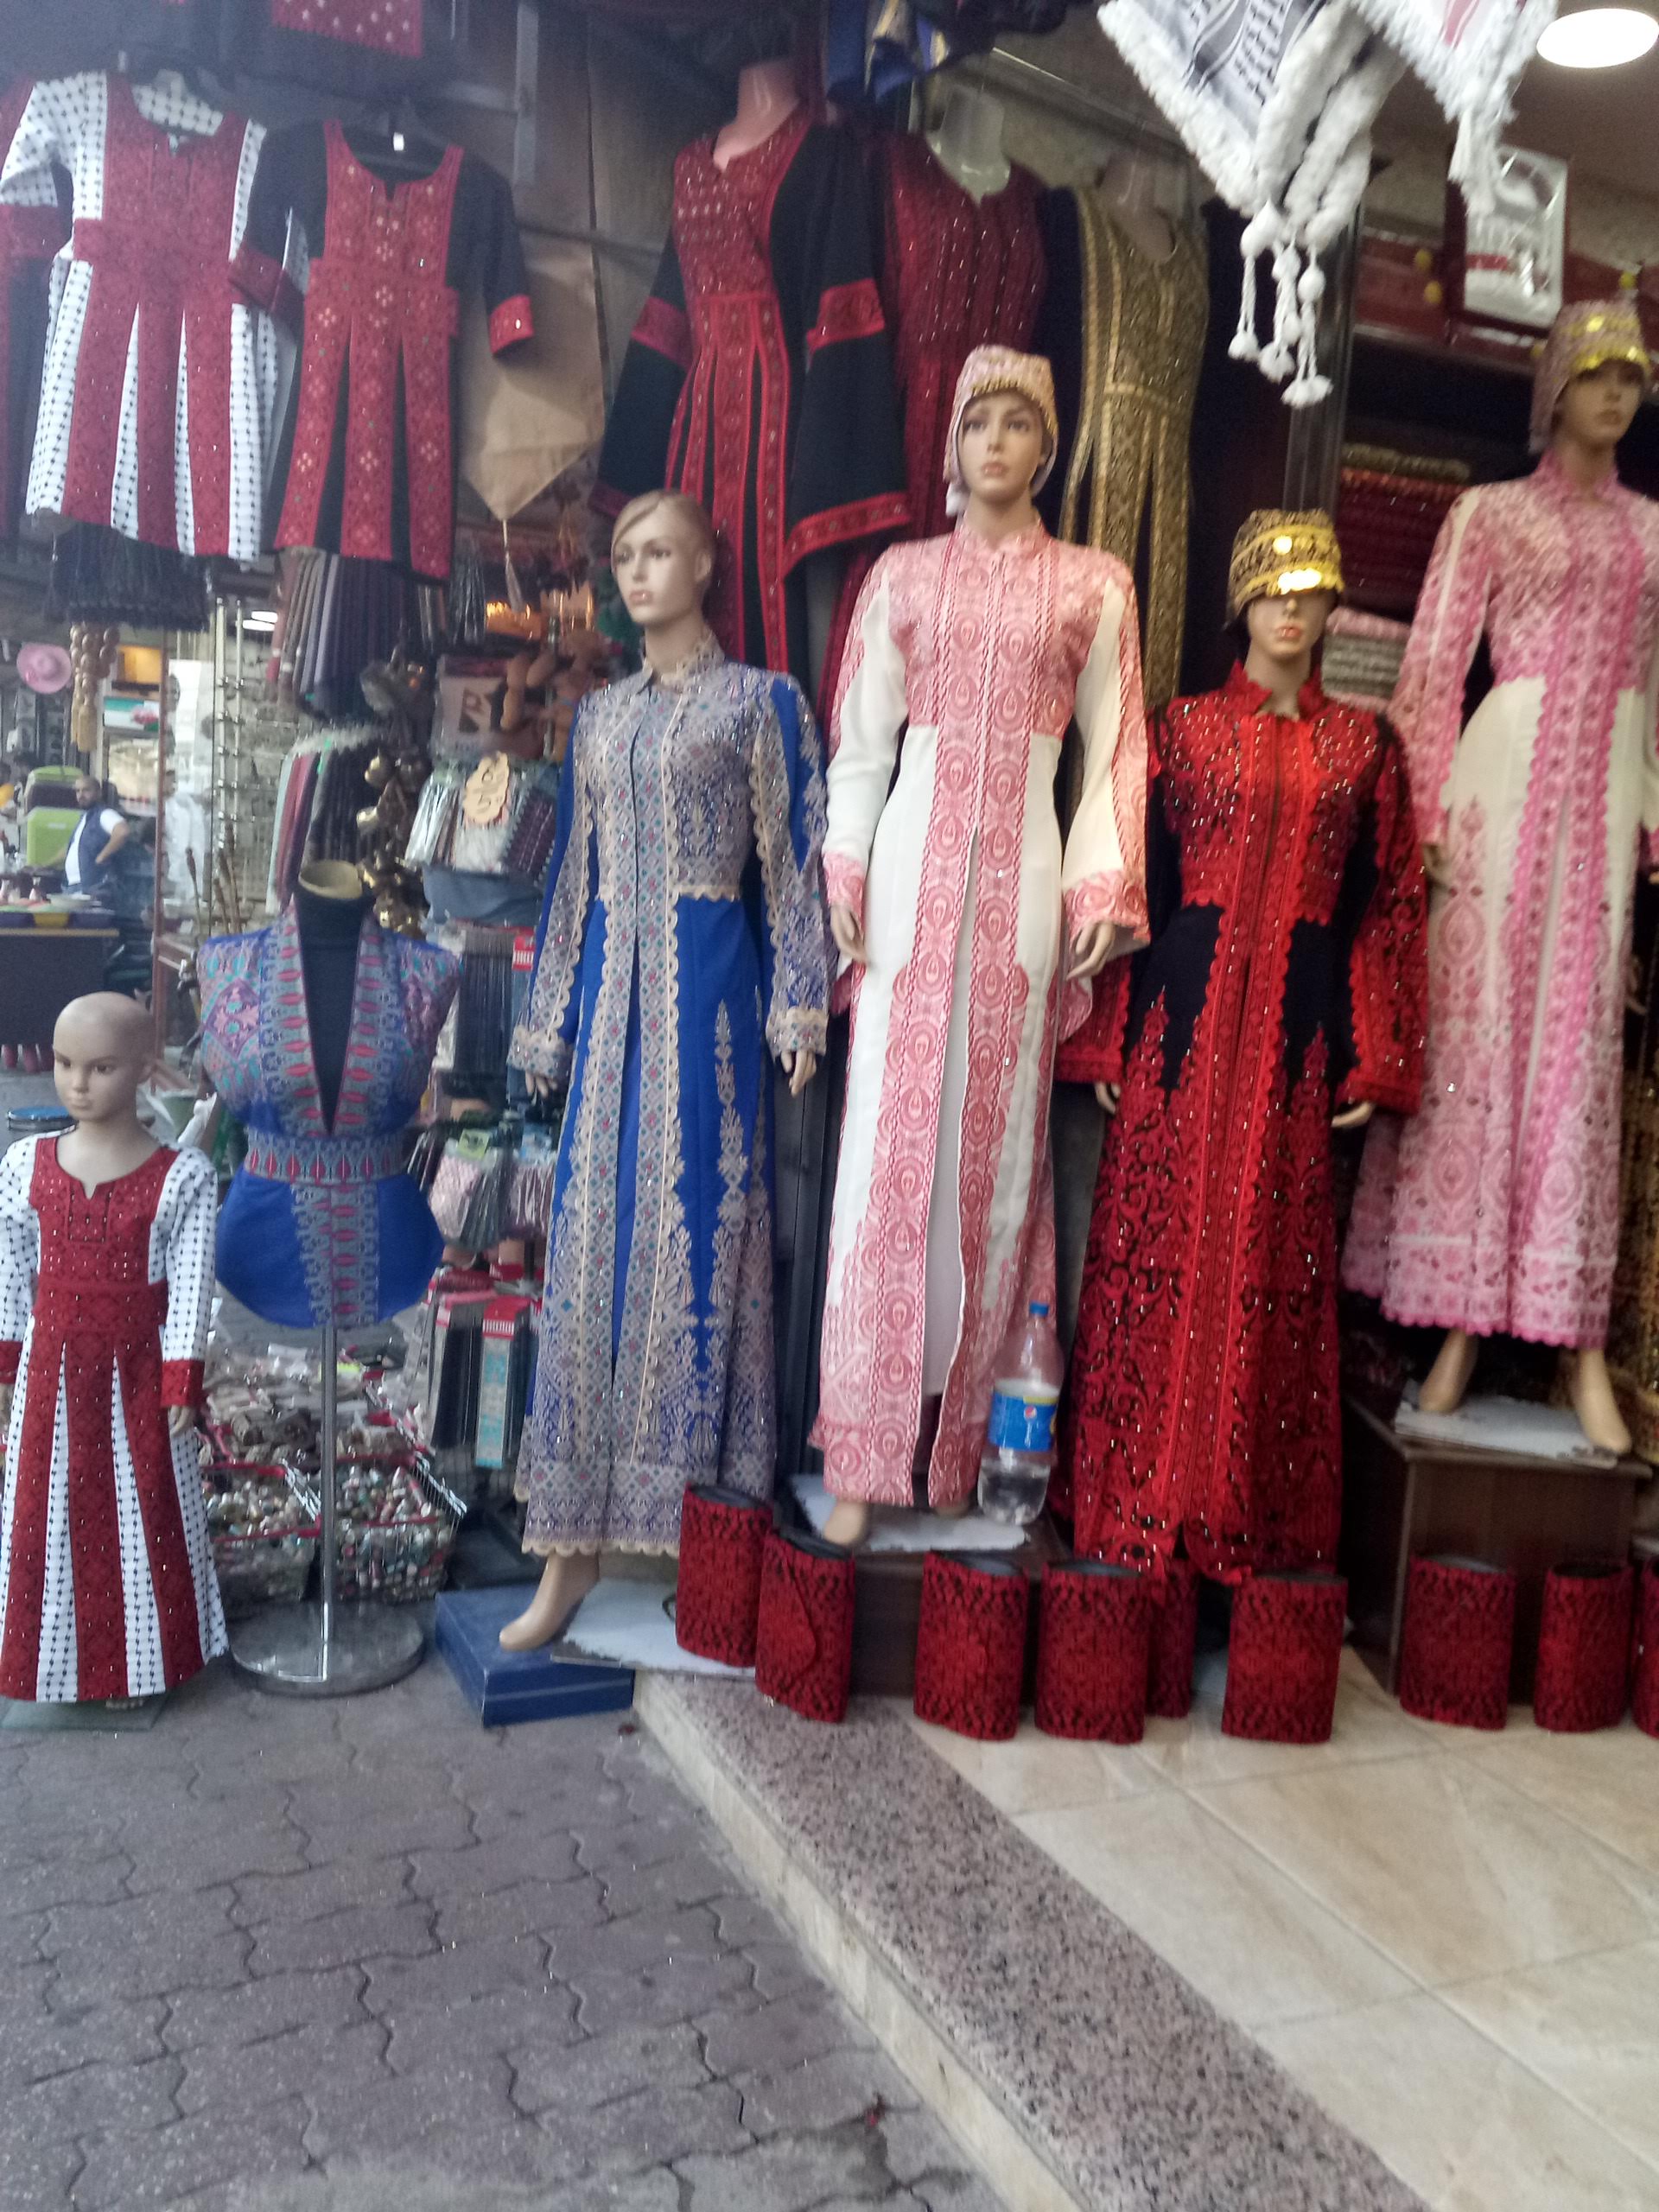 Palestinian Dress